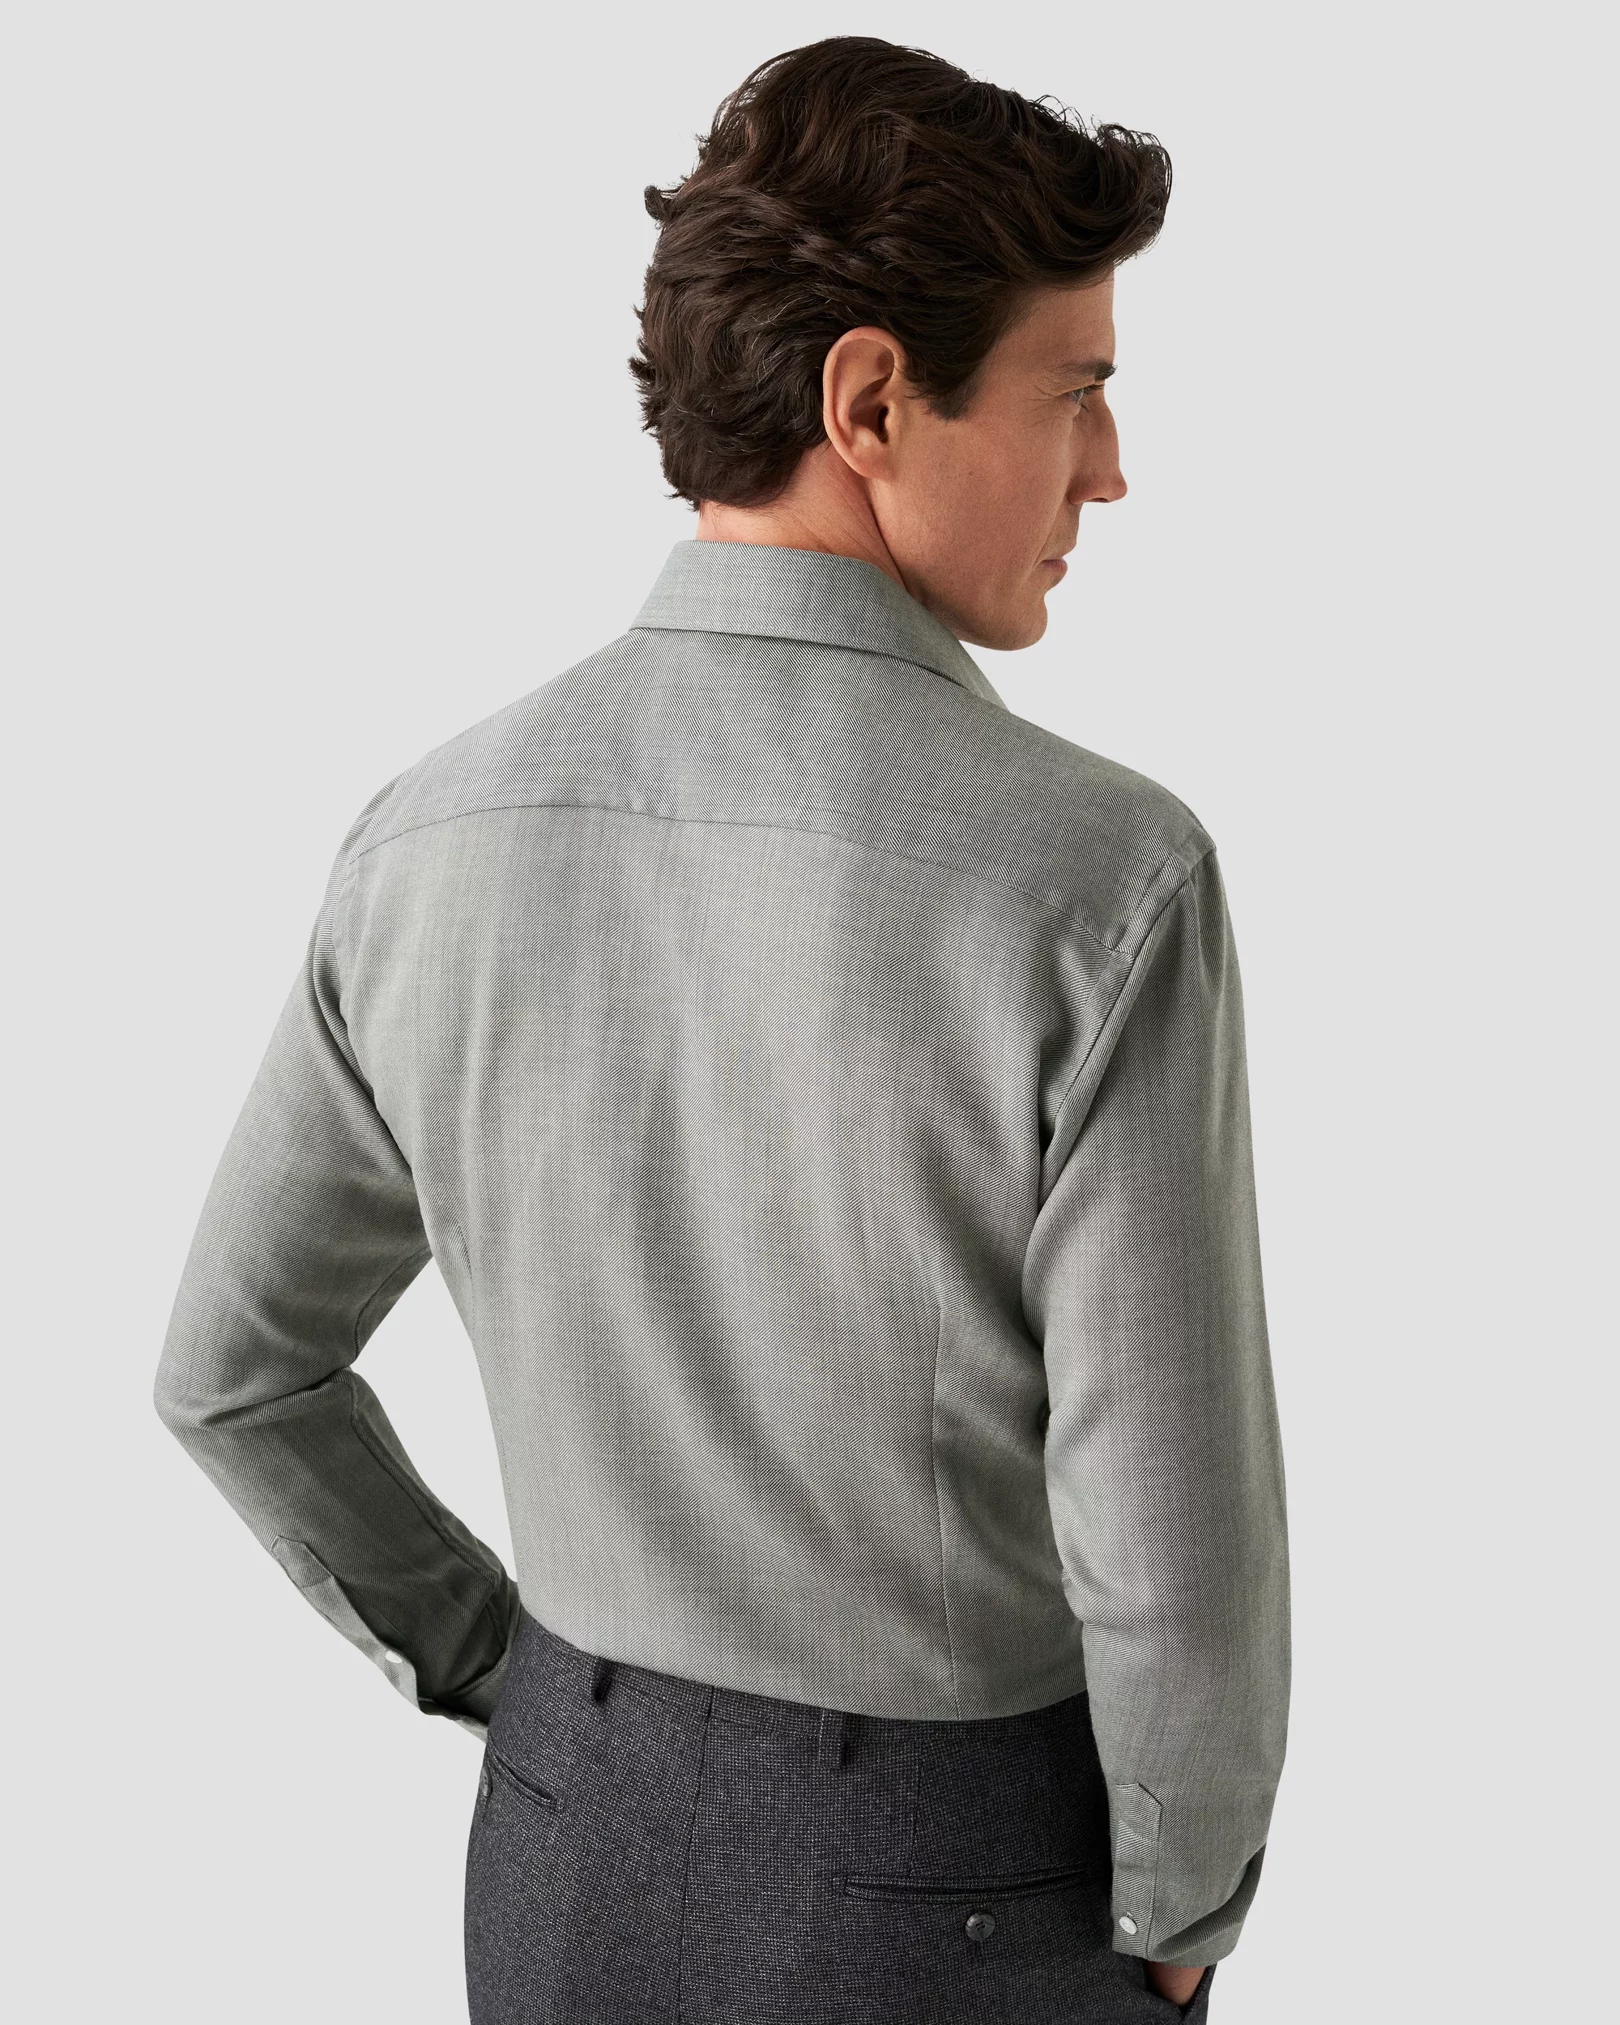 Eton - light grey merino shirt